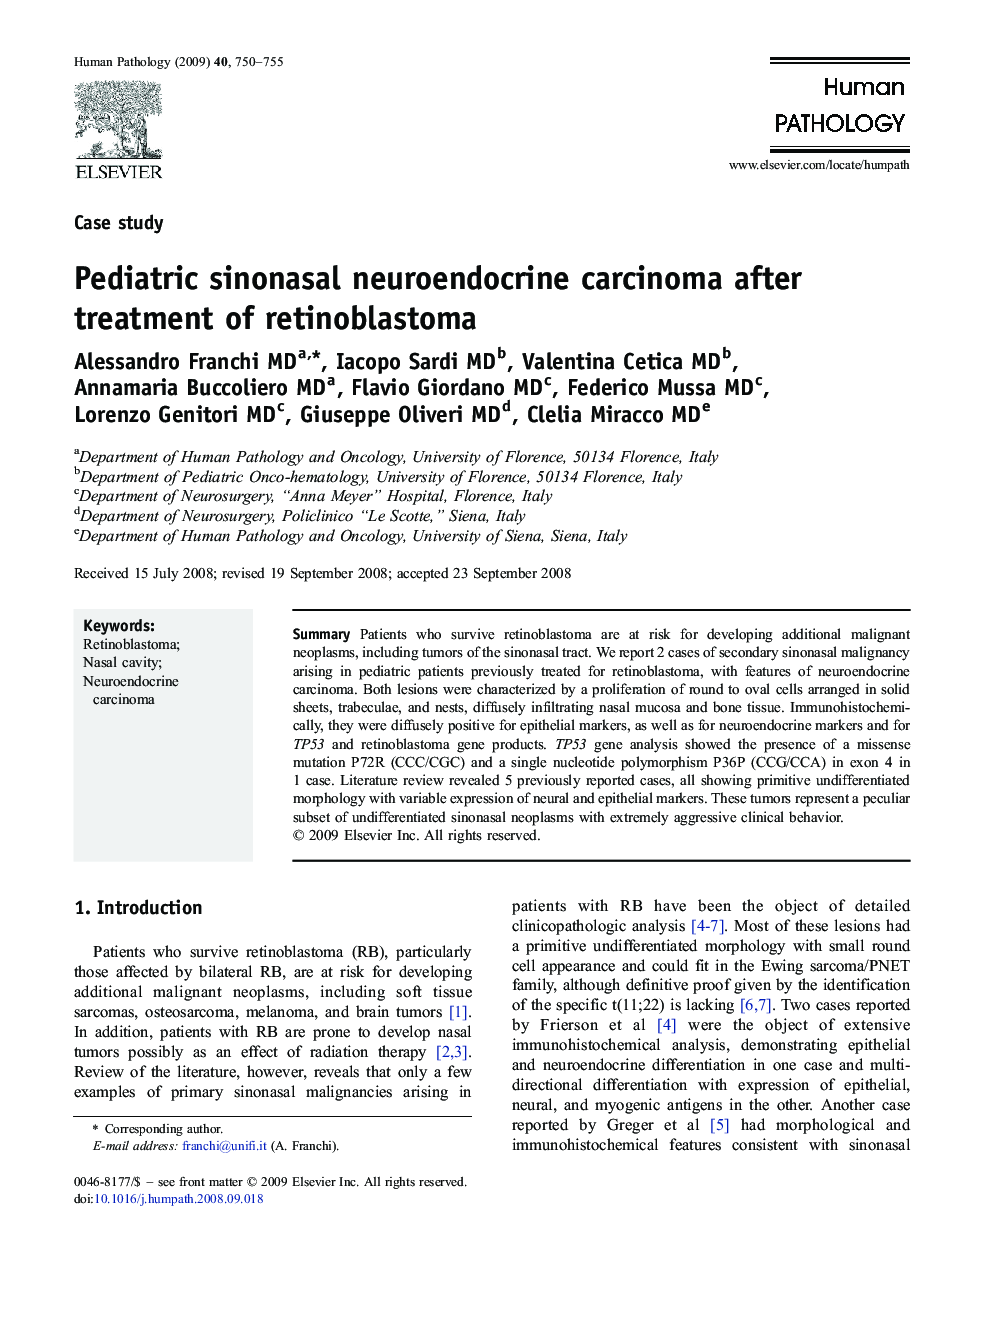 Pediatric sinonasal neuroendocrine carcinoma after treatment of retinoblastoma